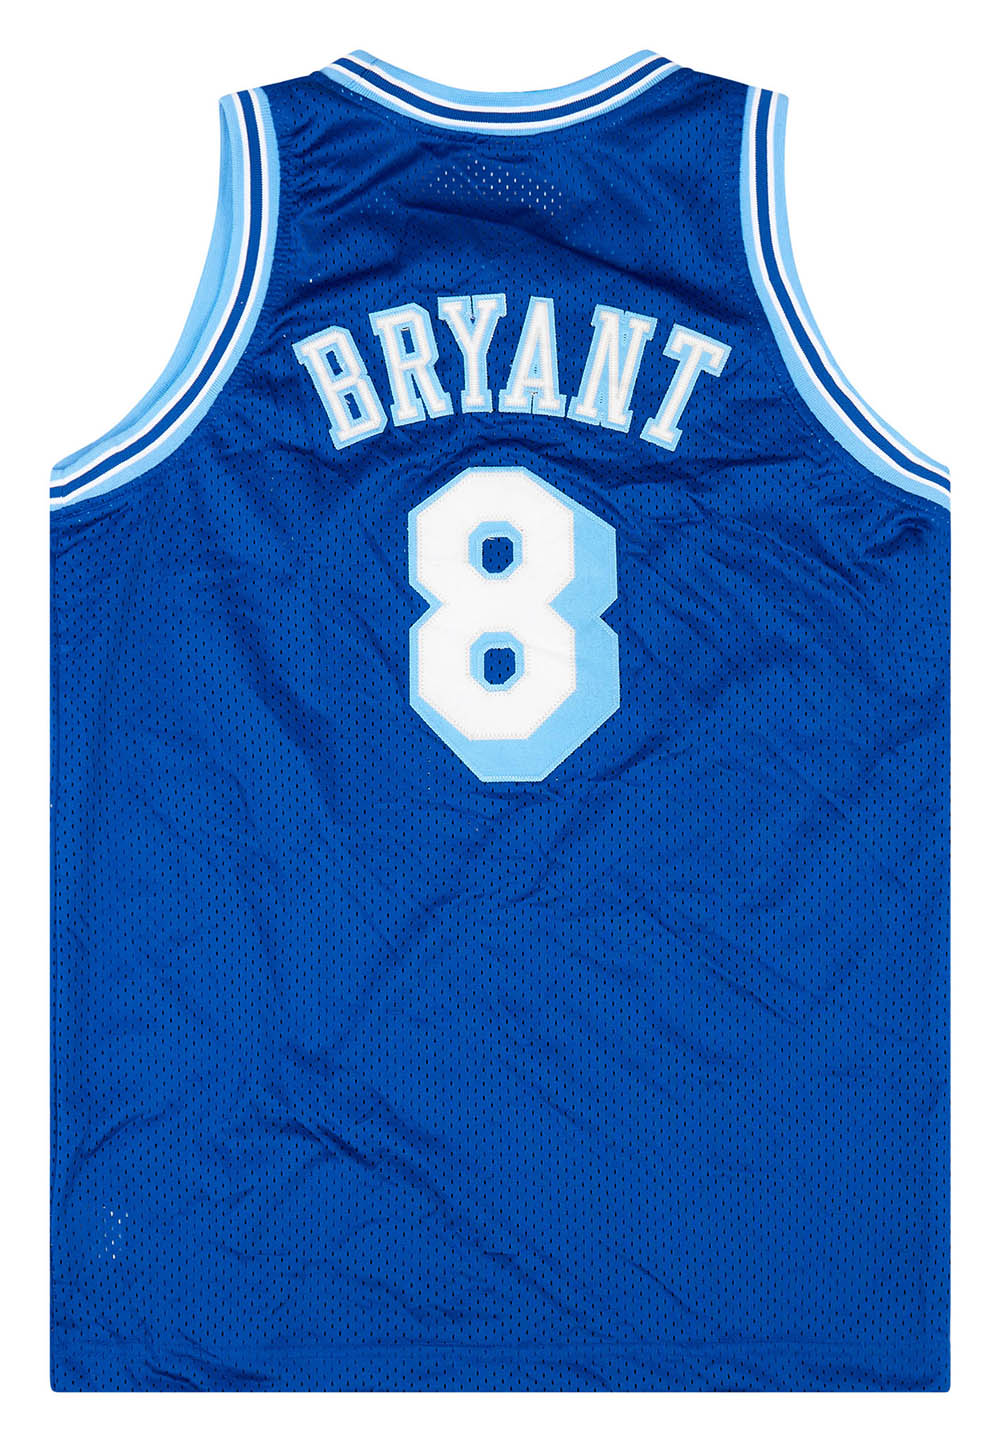 🏀 Vintage NBA Kobe Bryant Jerseys – The Throwback Store 🏀